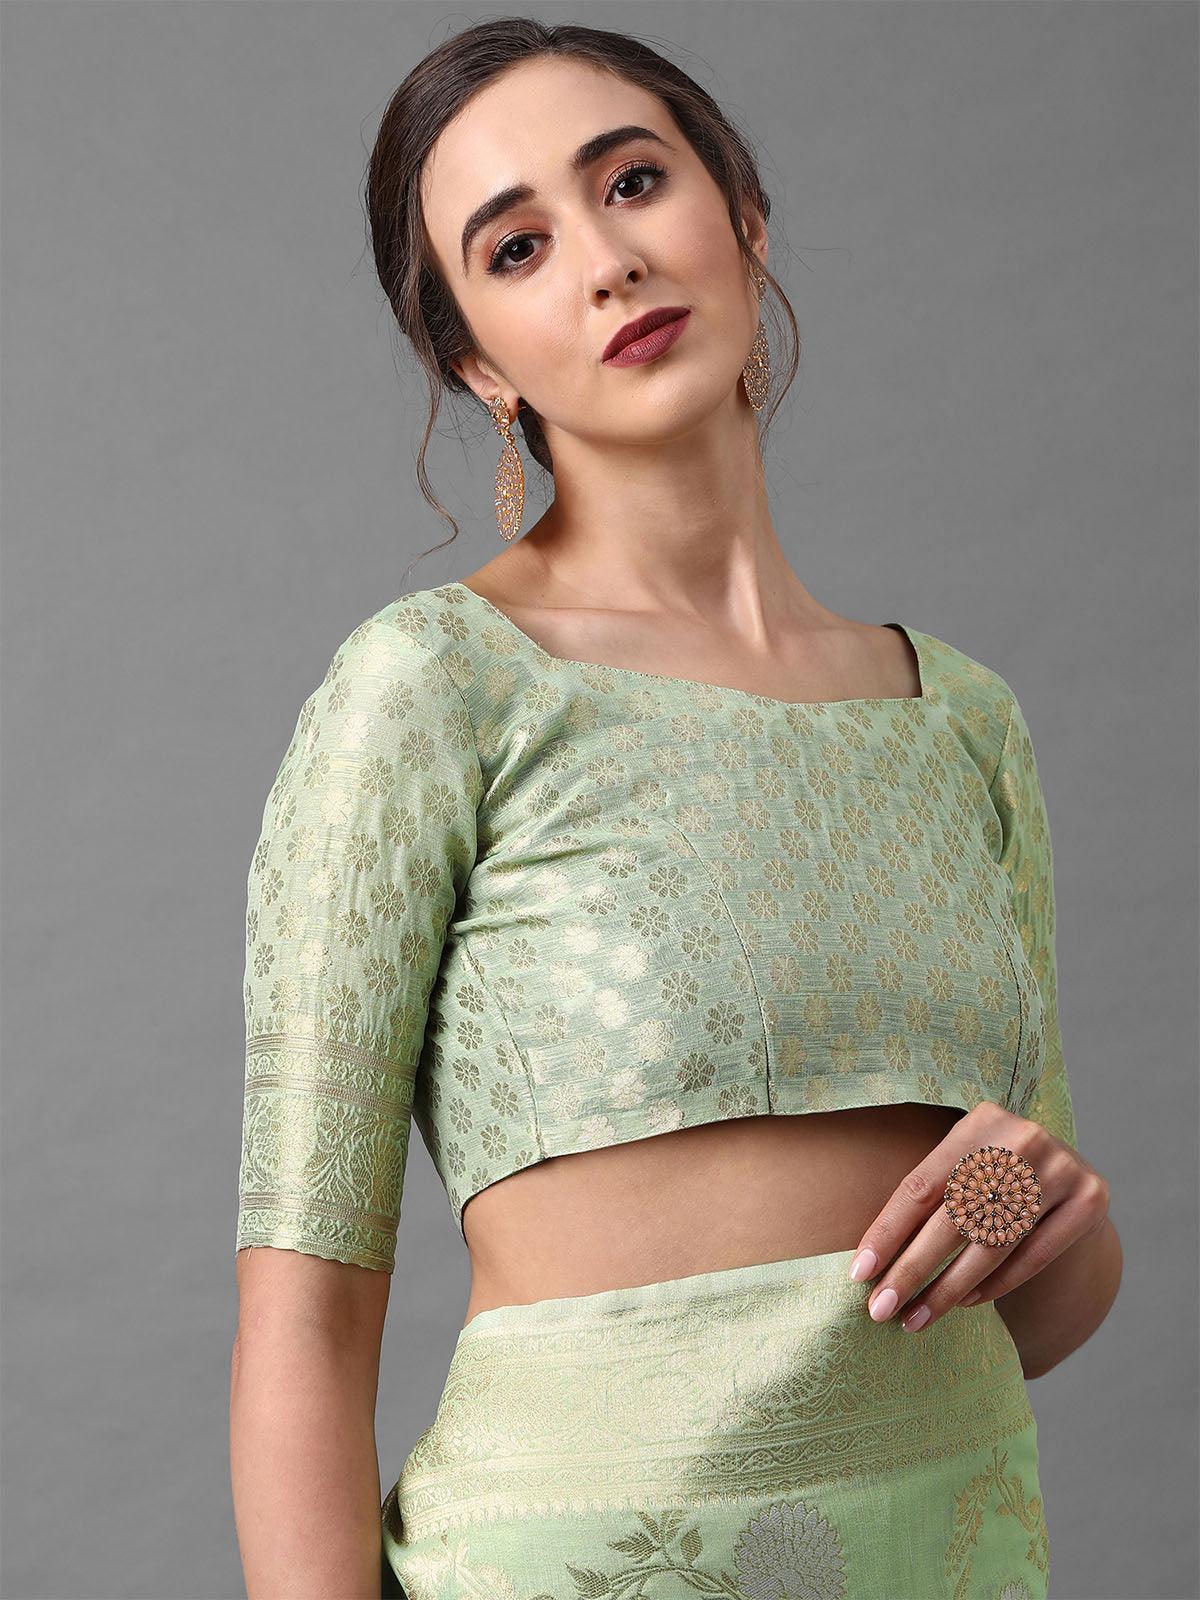 Women's Green Festive Silk Blend Banarsi Saree With Unstitched Blouse - Odette